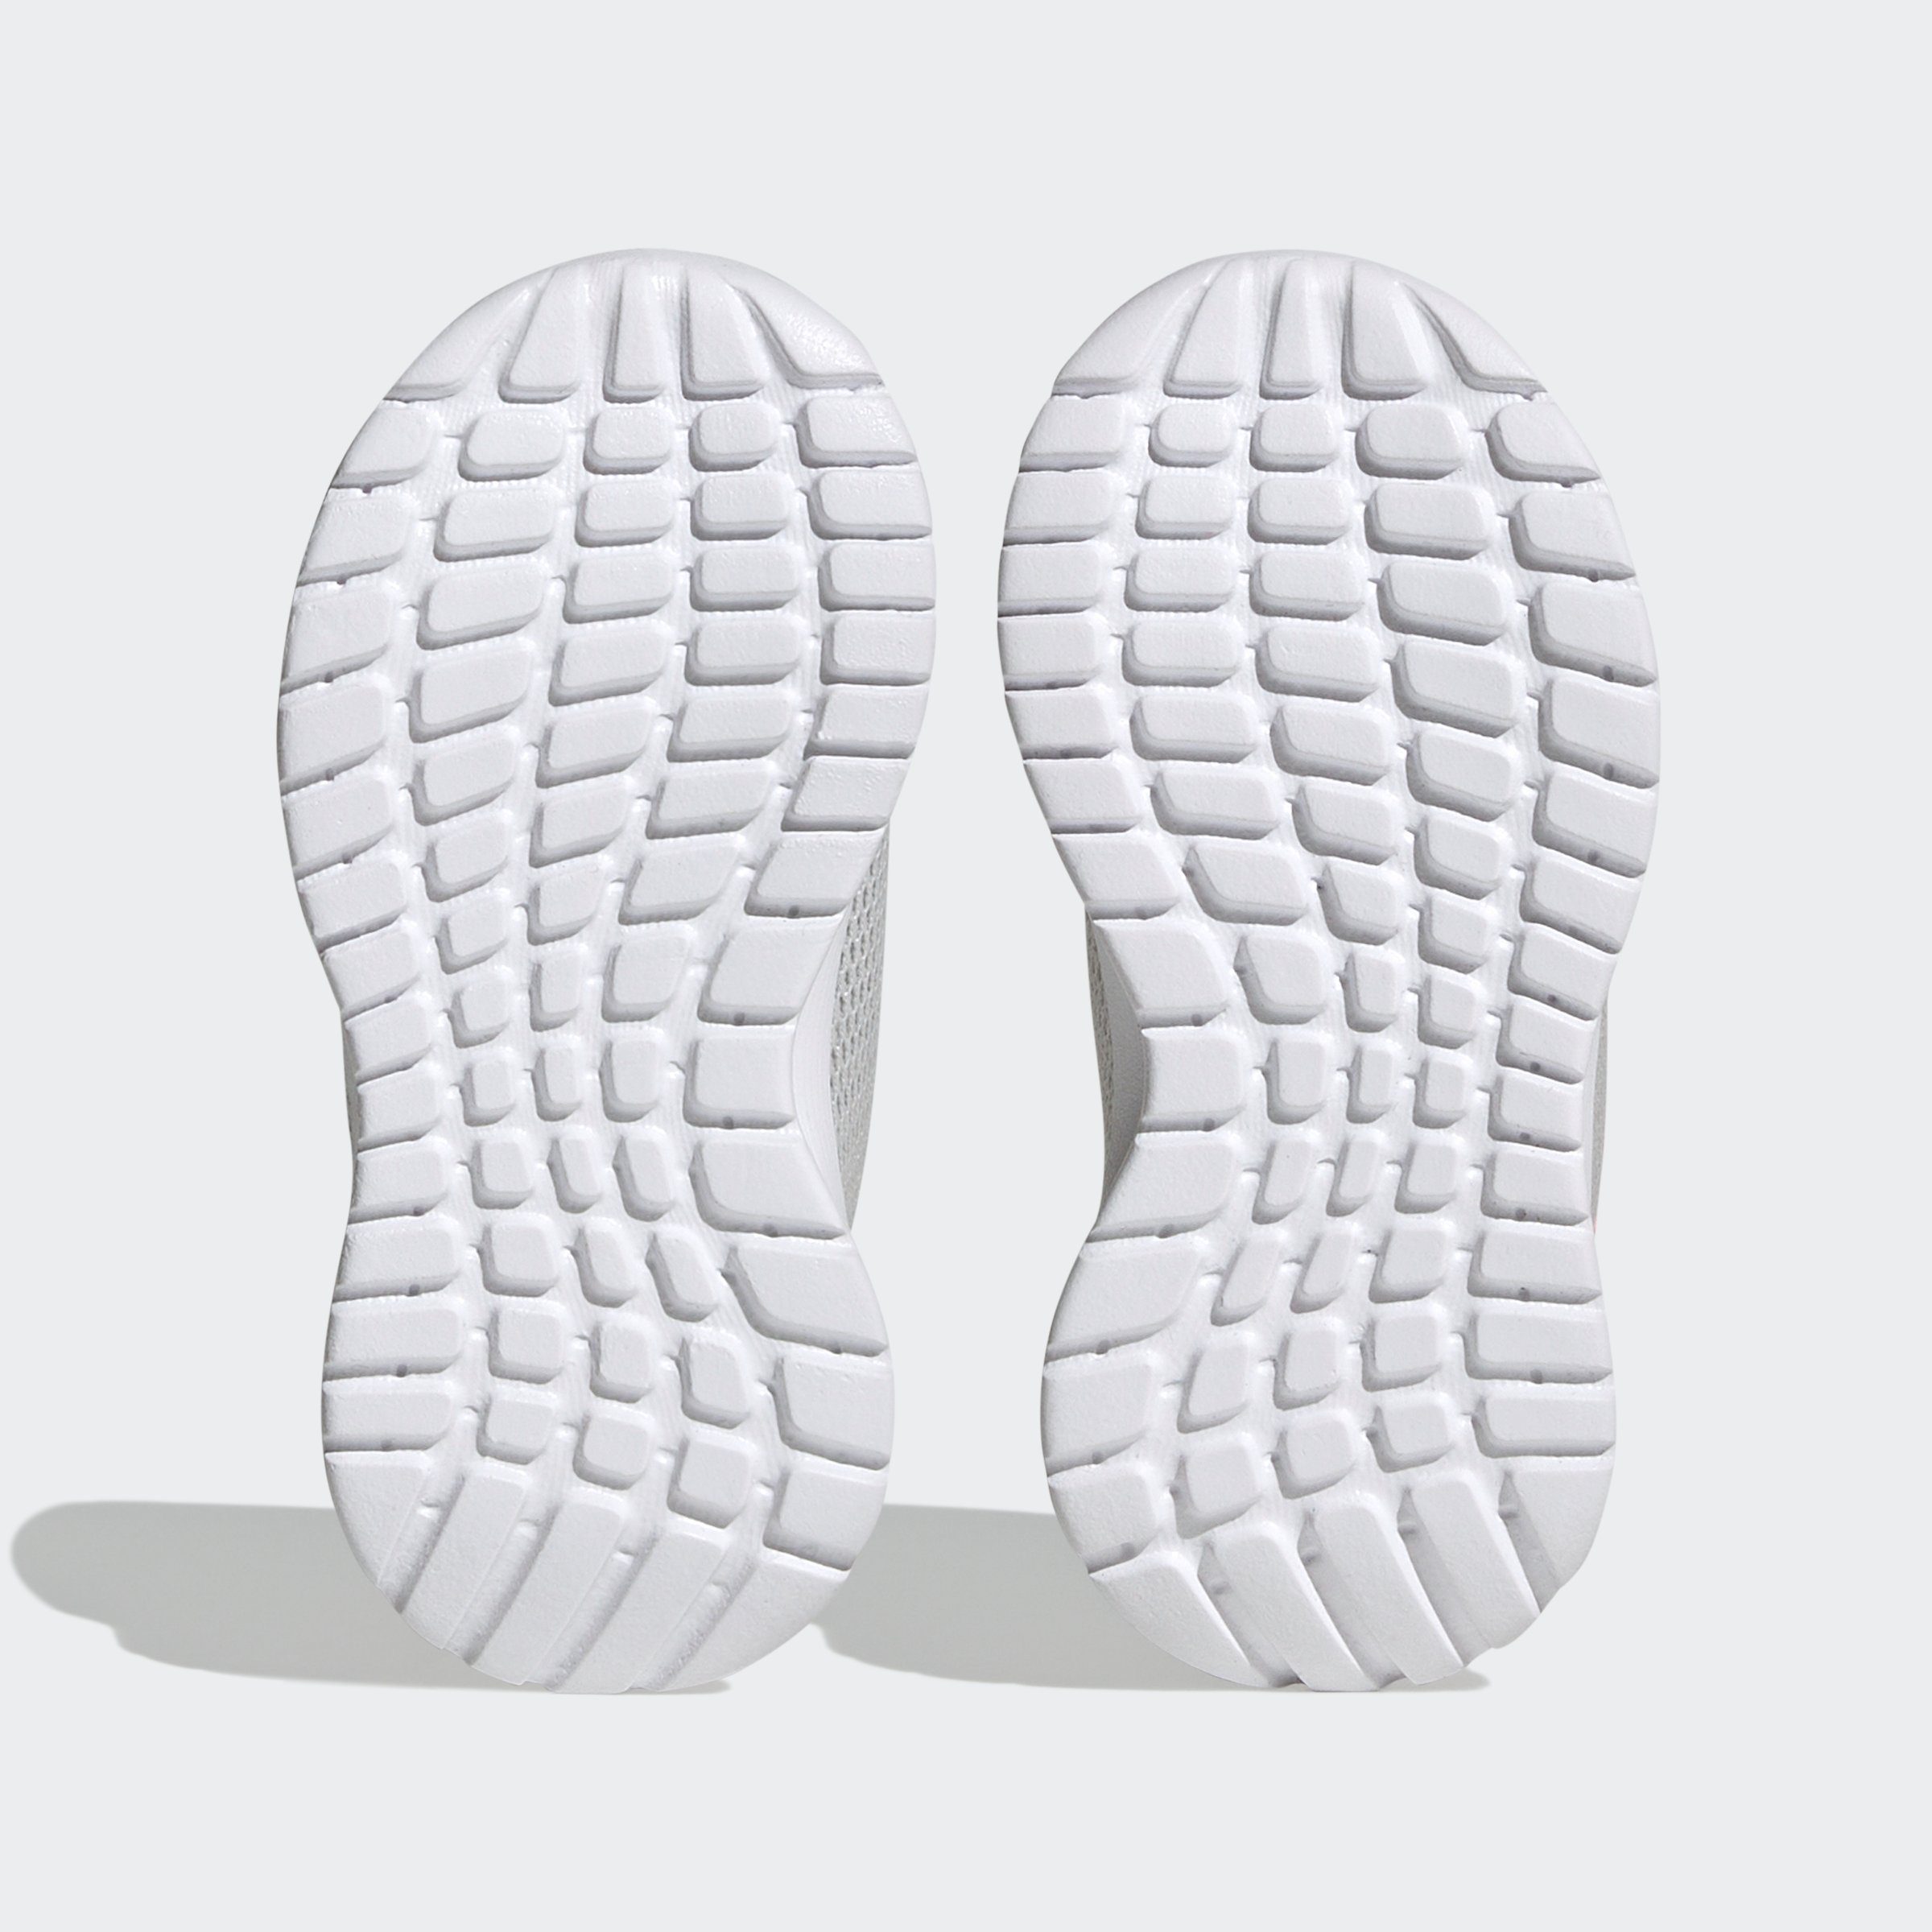 adidas Sportswear TENSAUR Sneaker RUN Klettverschluss mit grau-rosa